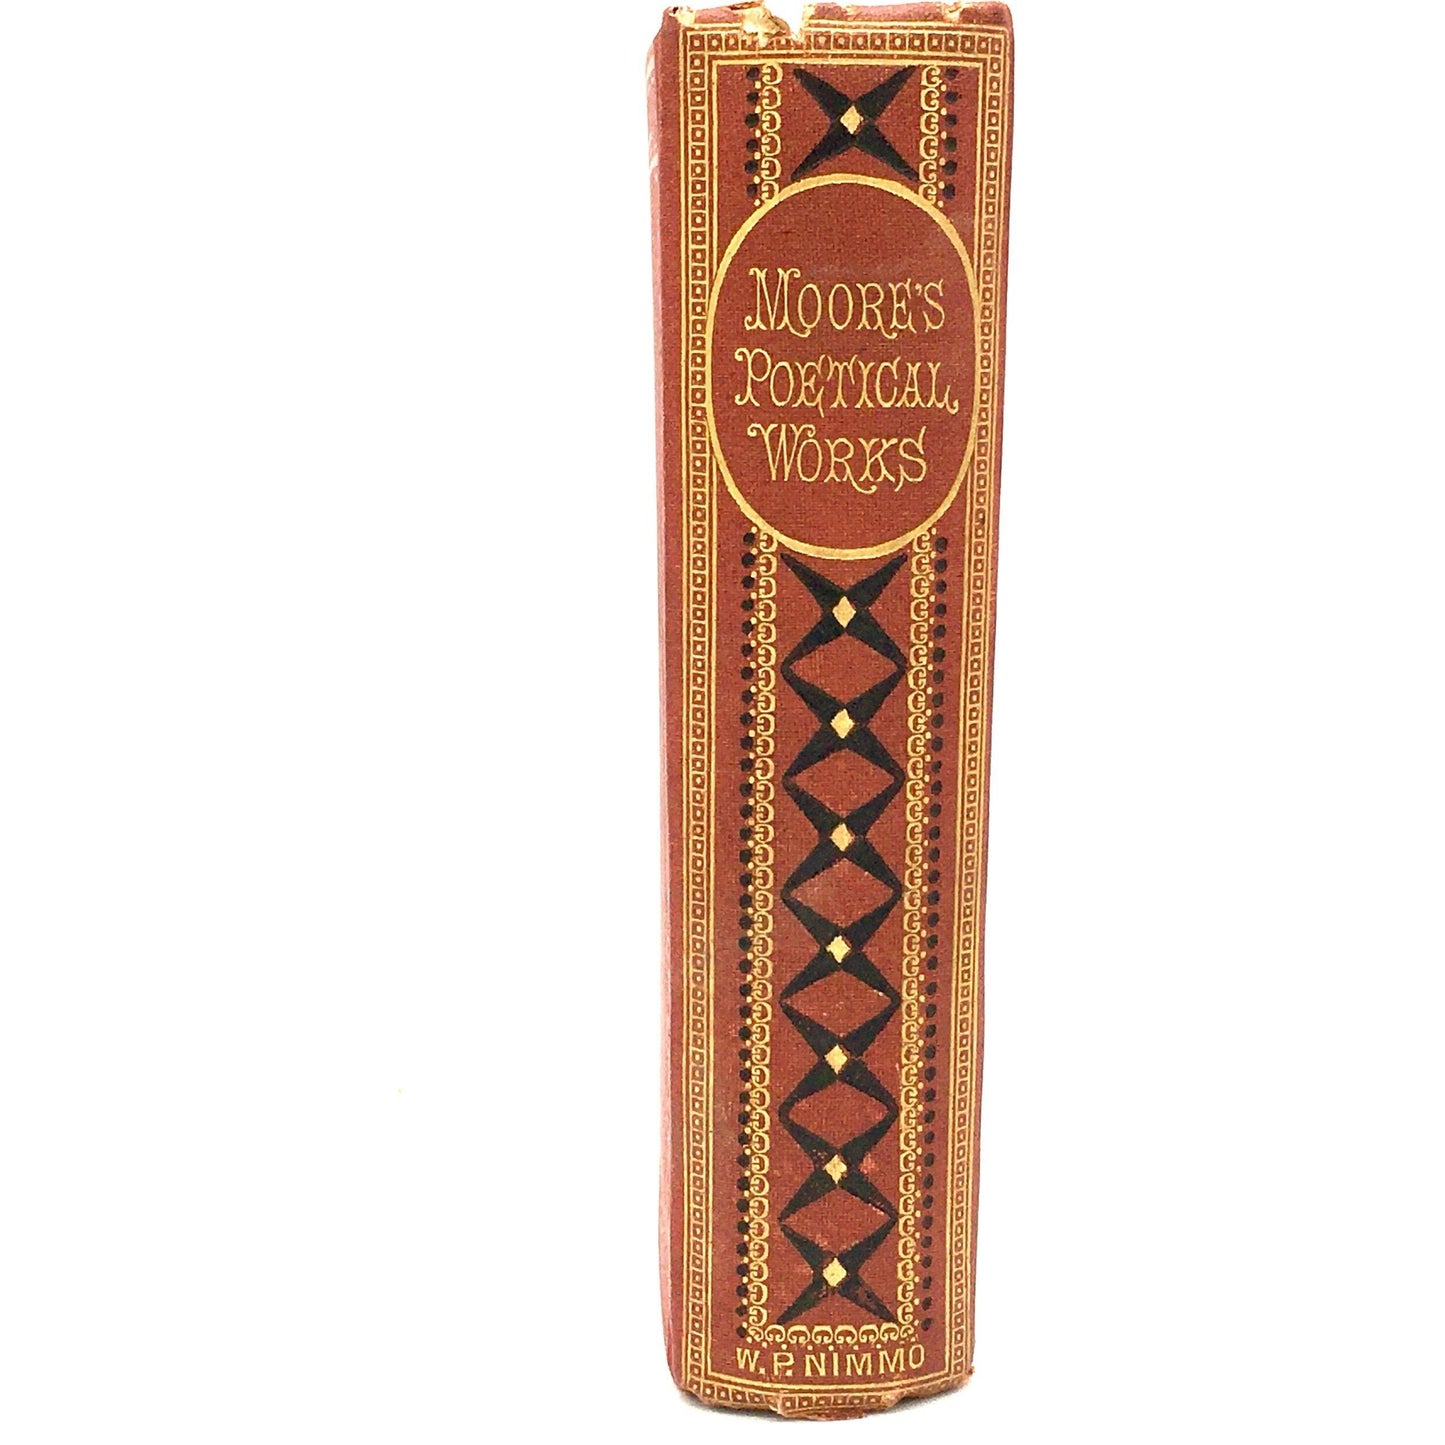 MOORE, Thomas “The Poetical Works of Thomas Moore” [William P. Nimmo, c1870] - Buzz Bookstore